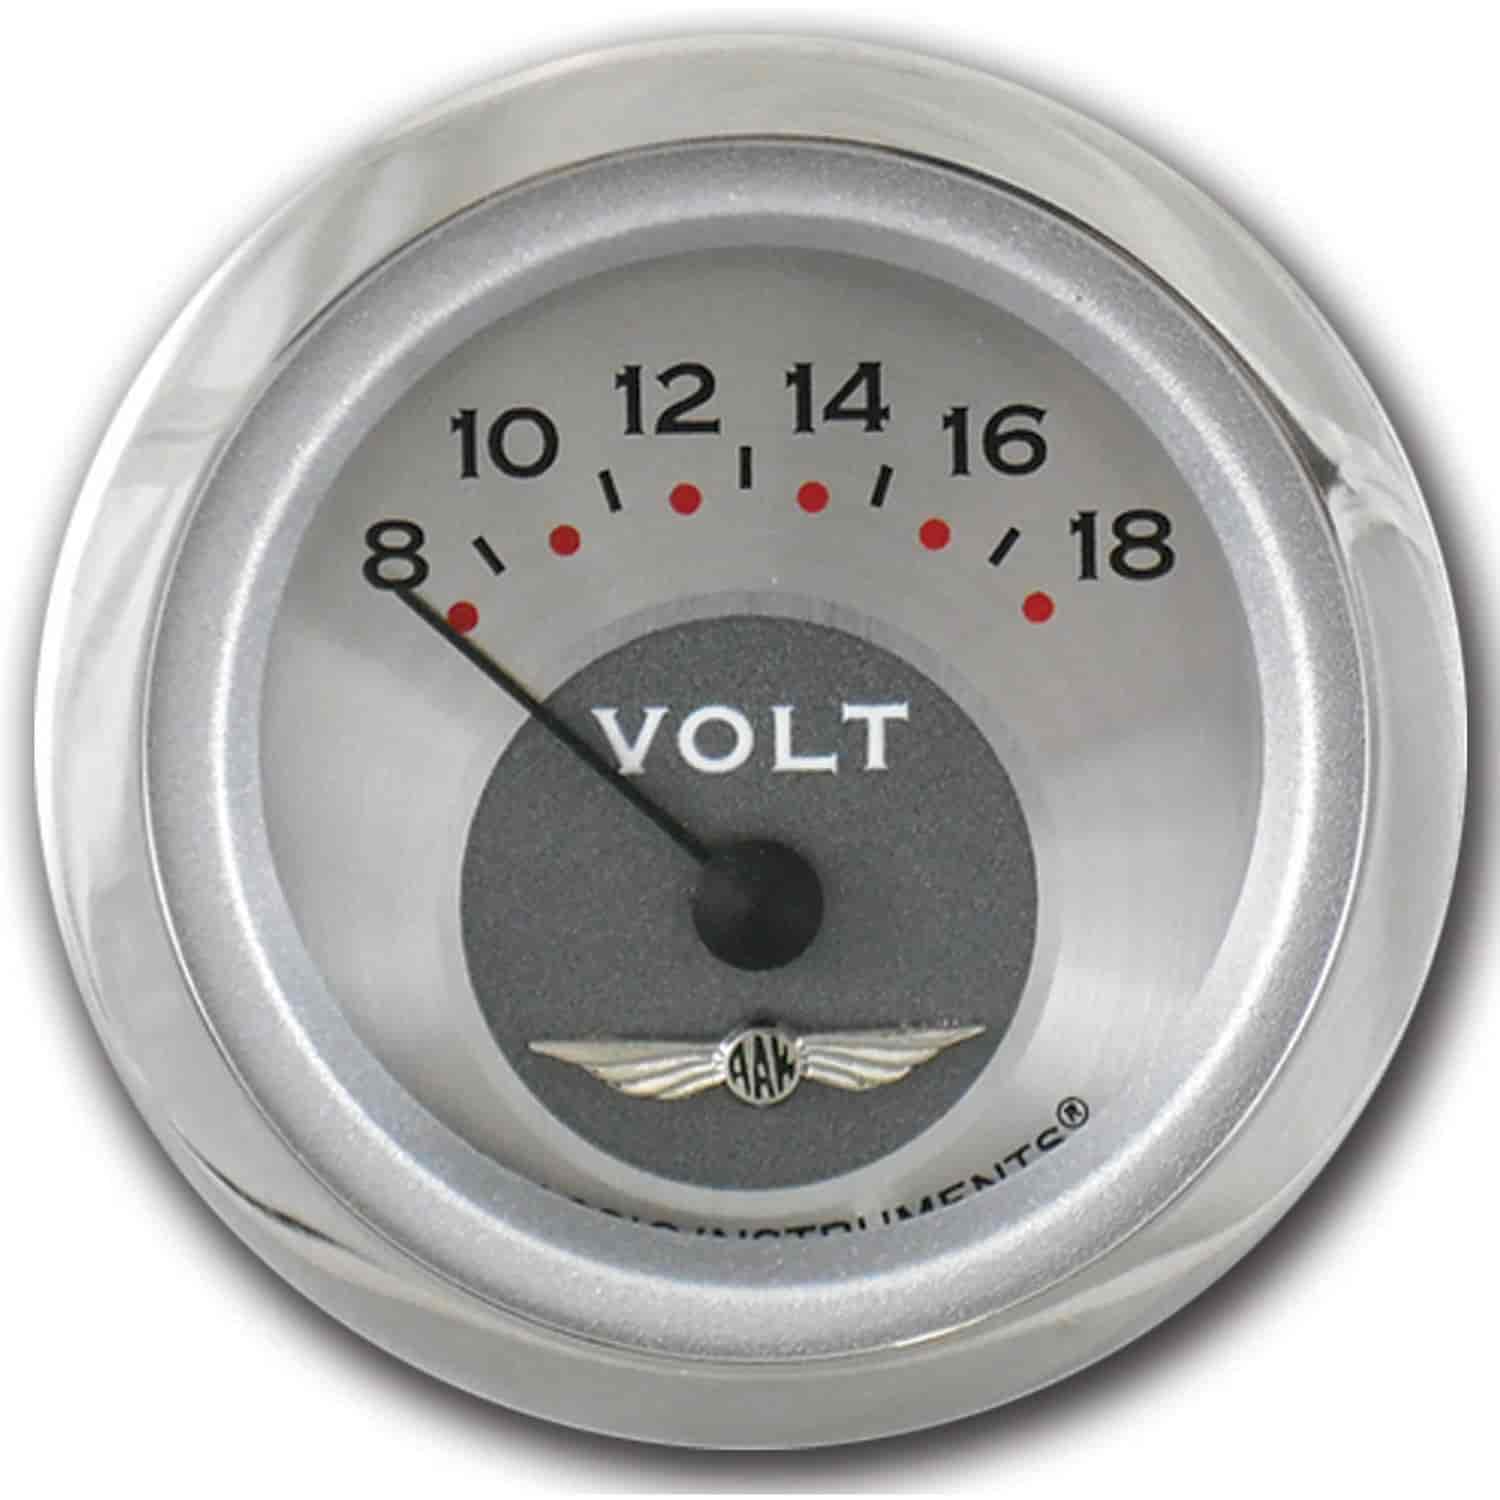 All American Series Voltmeter 2-1/8" Electrical